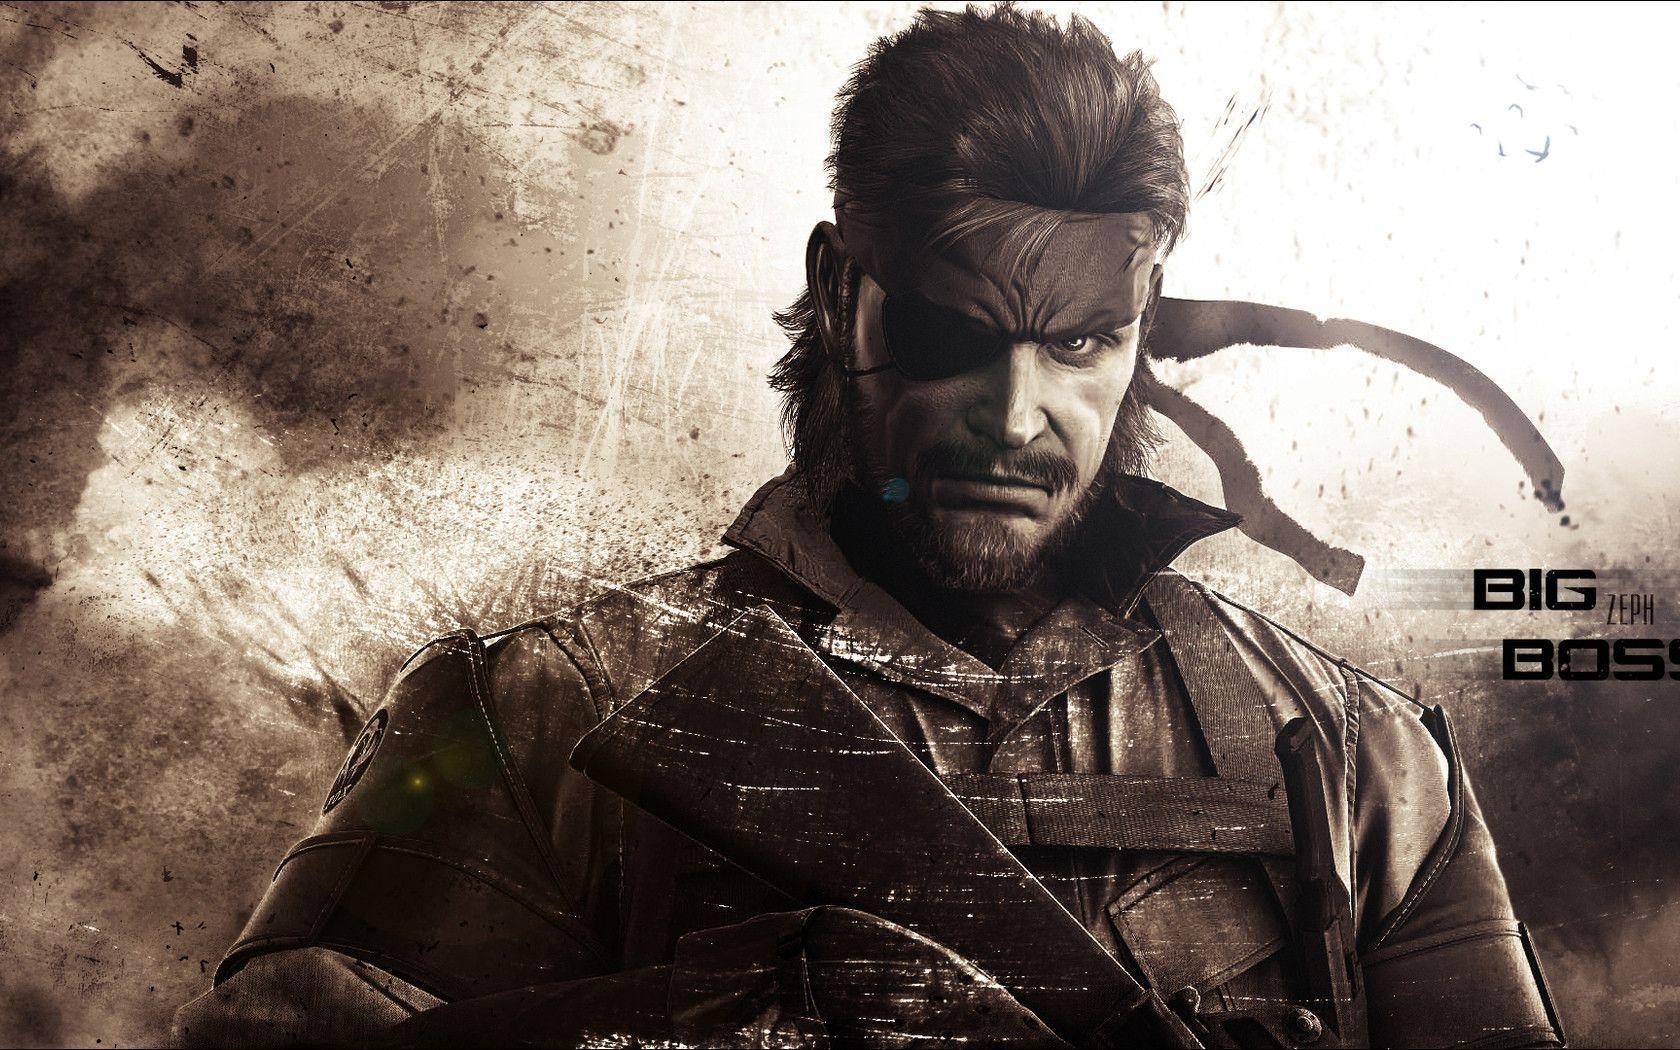 Big Boss The Metal Gear Wallpaper